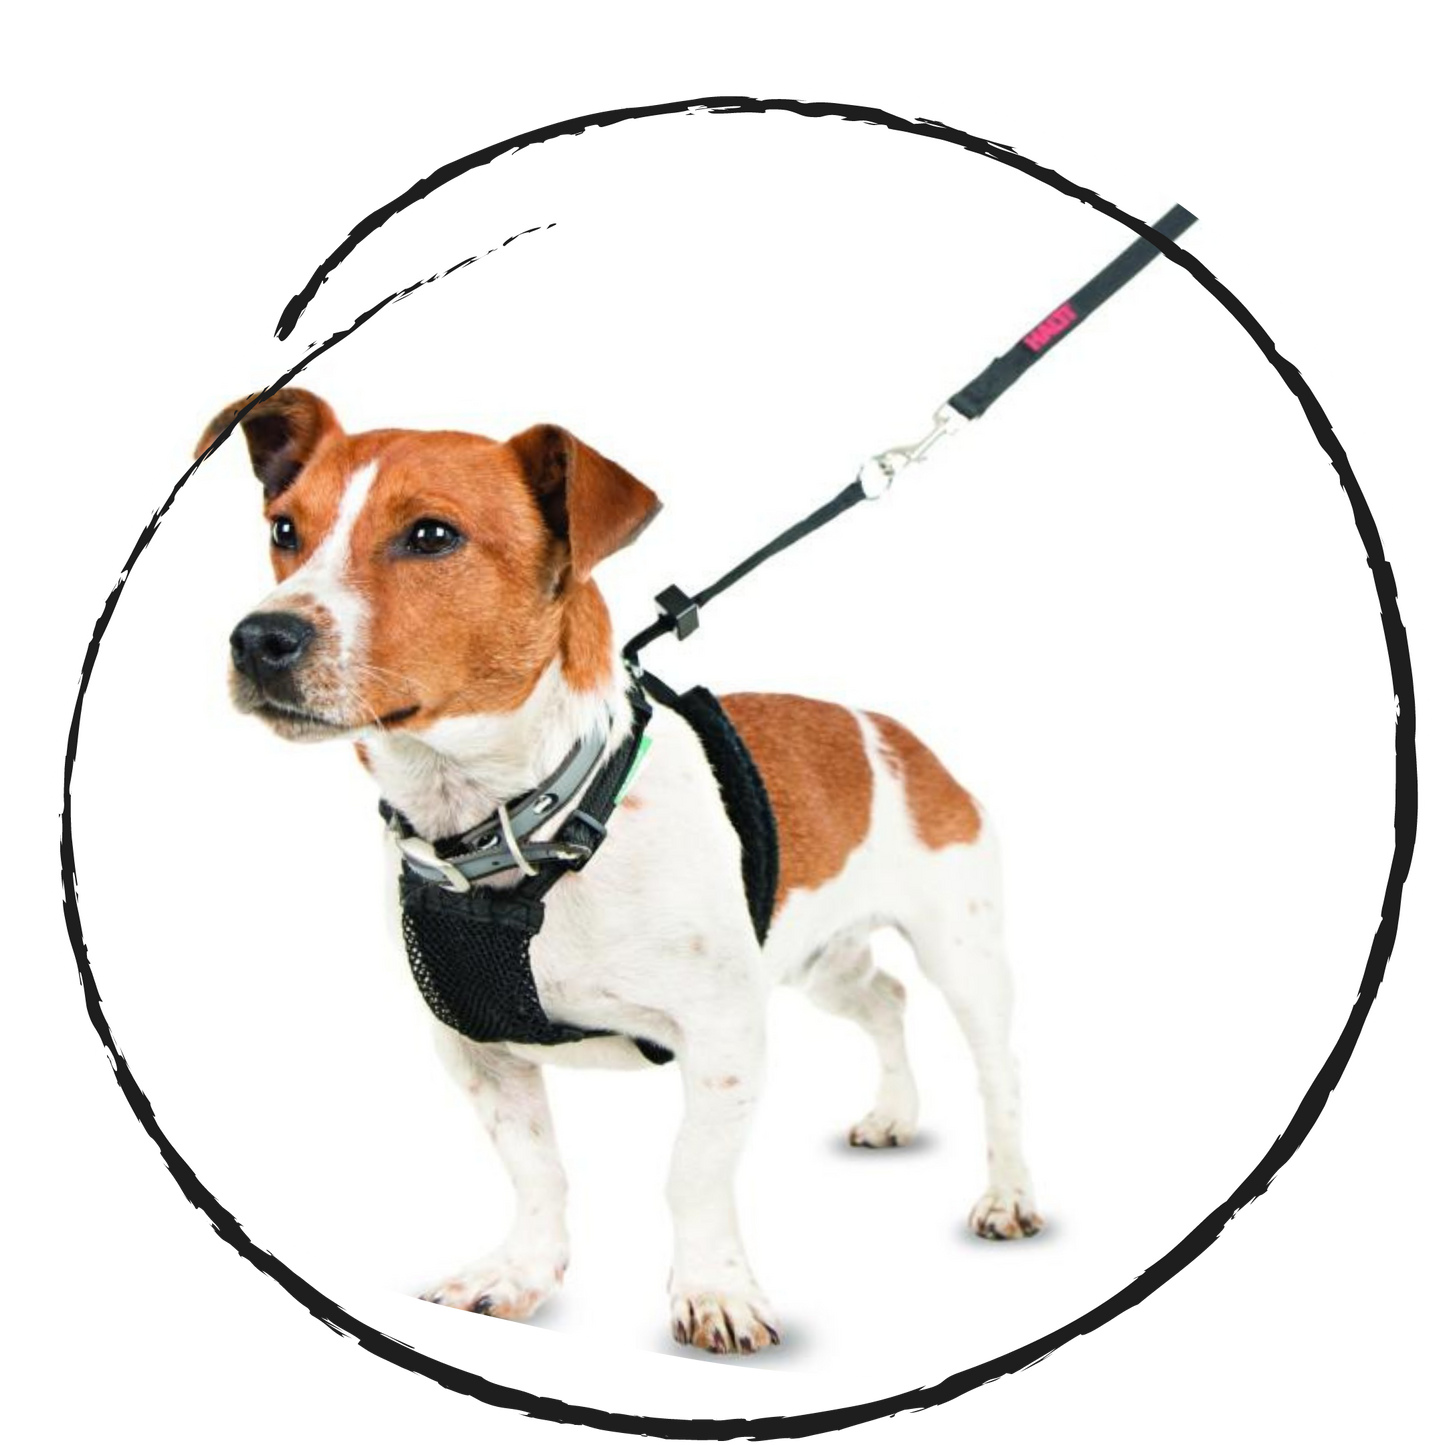 Halti no pull dog training harness on a small dog